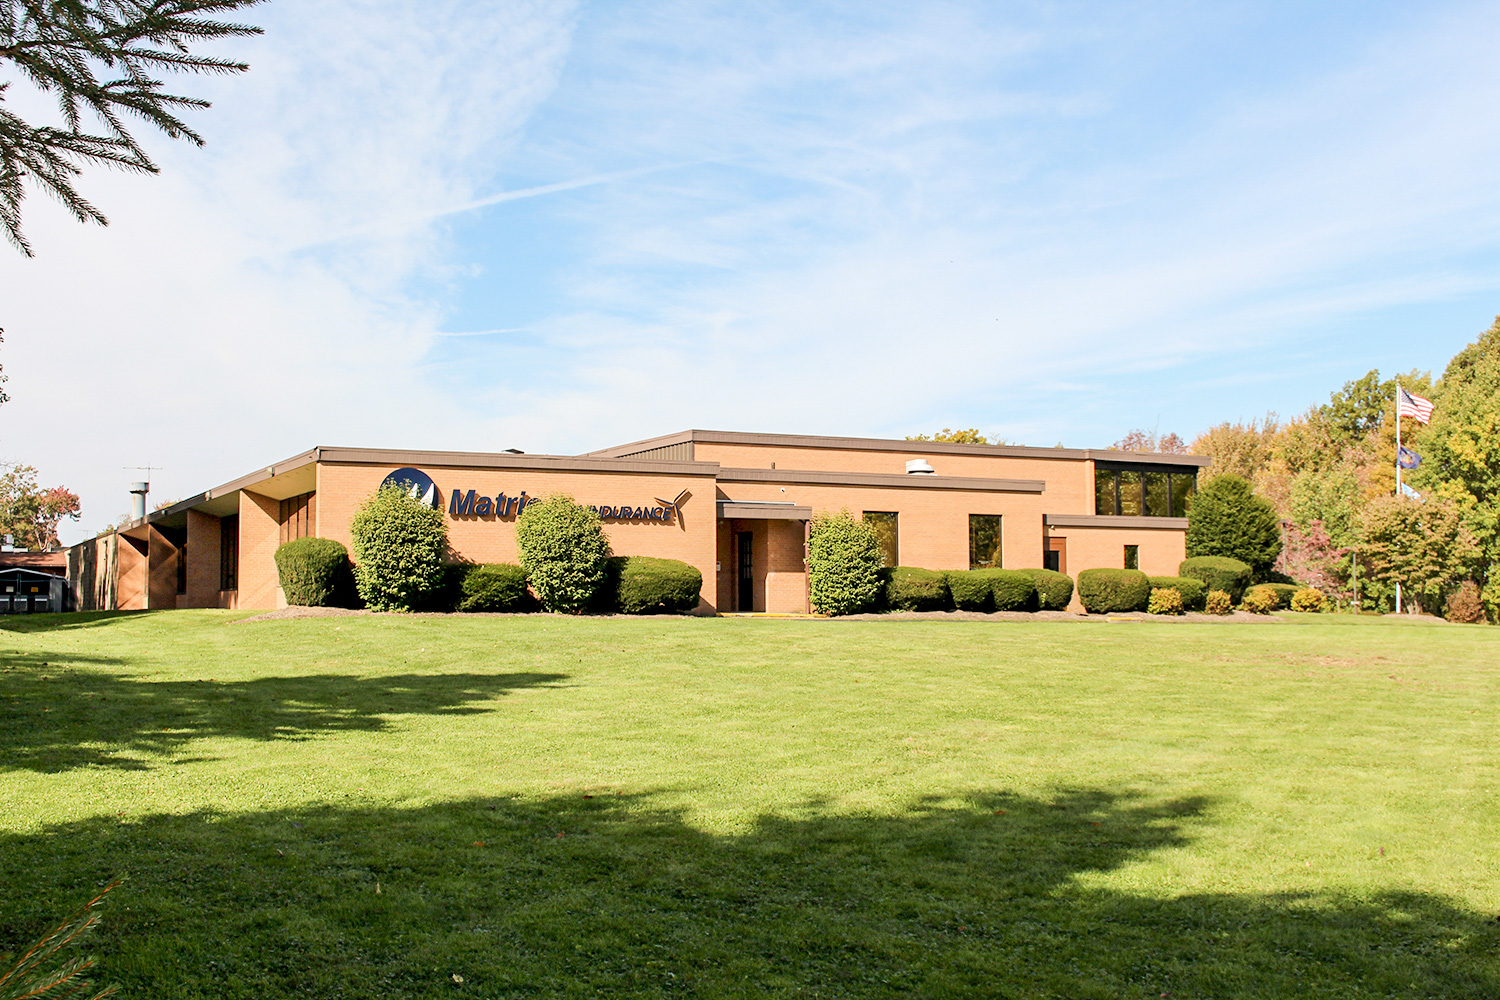 Matric Group Headquarters in Seneca, PA